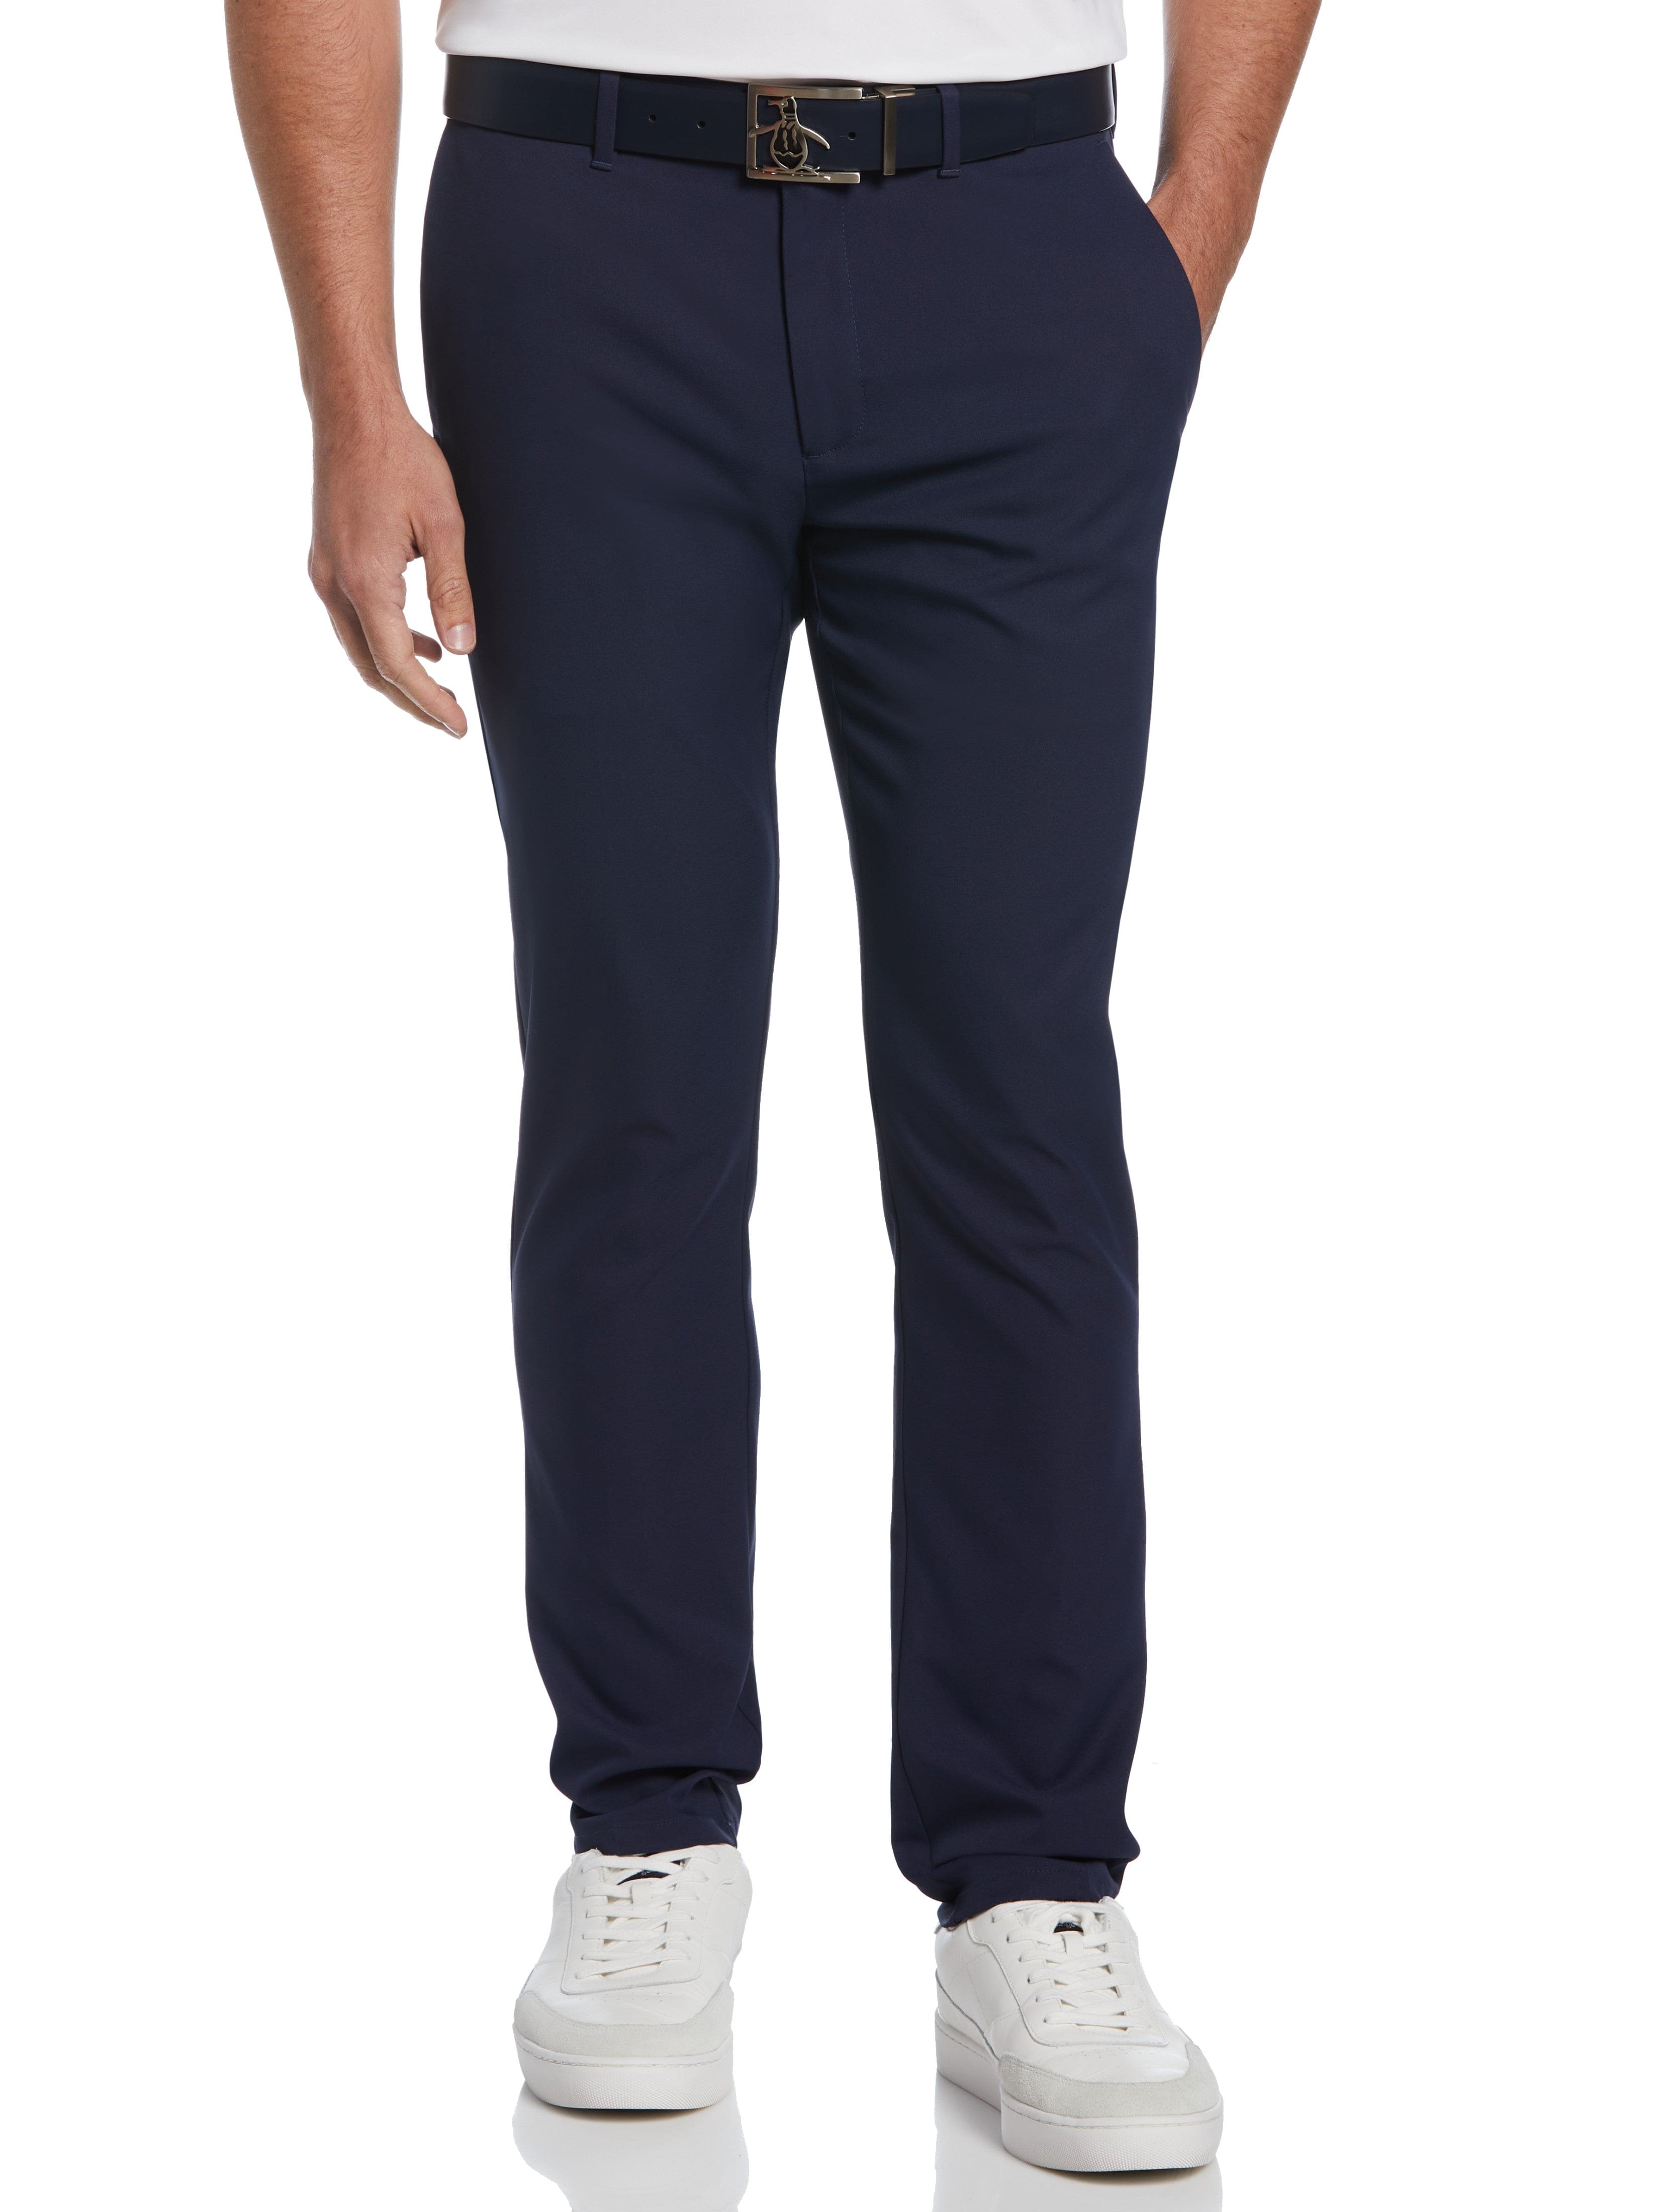 Original Penguin Mens Flat Front Solid Golf Pants, Size 31 x 32, Dark Navy Blue, 100% Polyester | Golf Apparel Shop